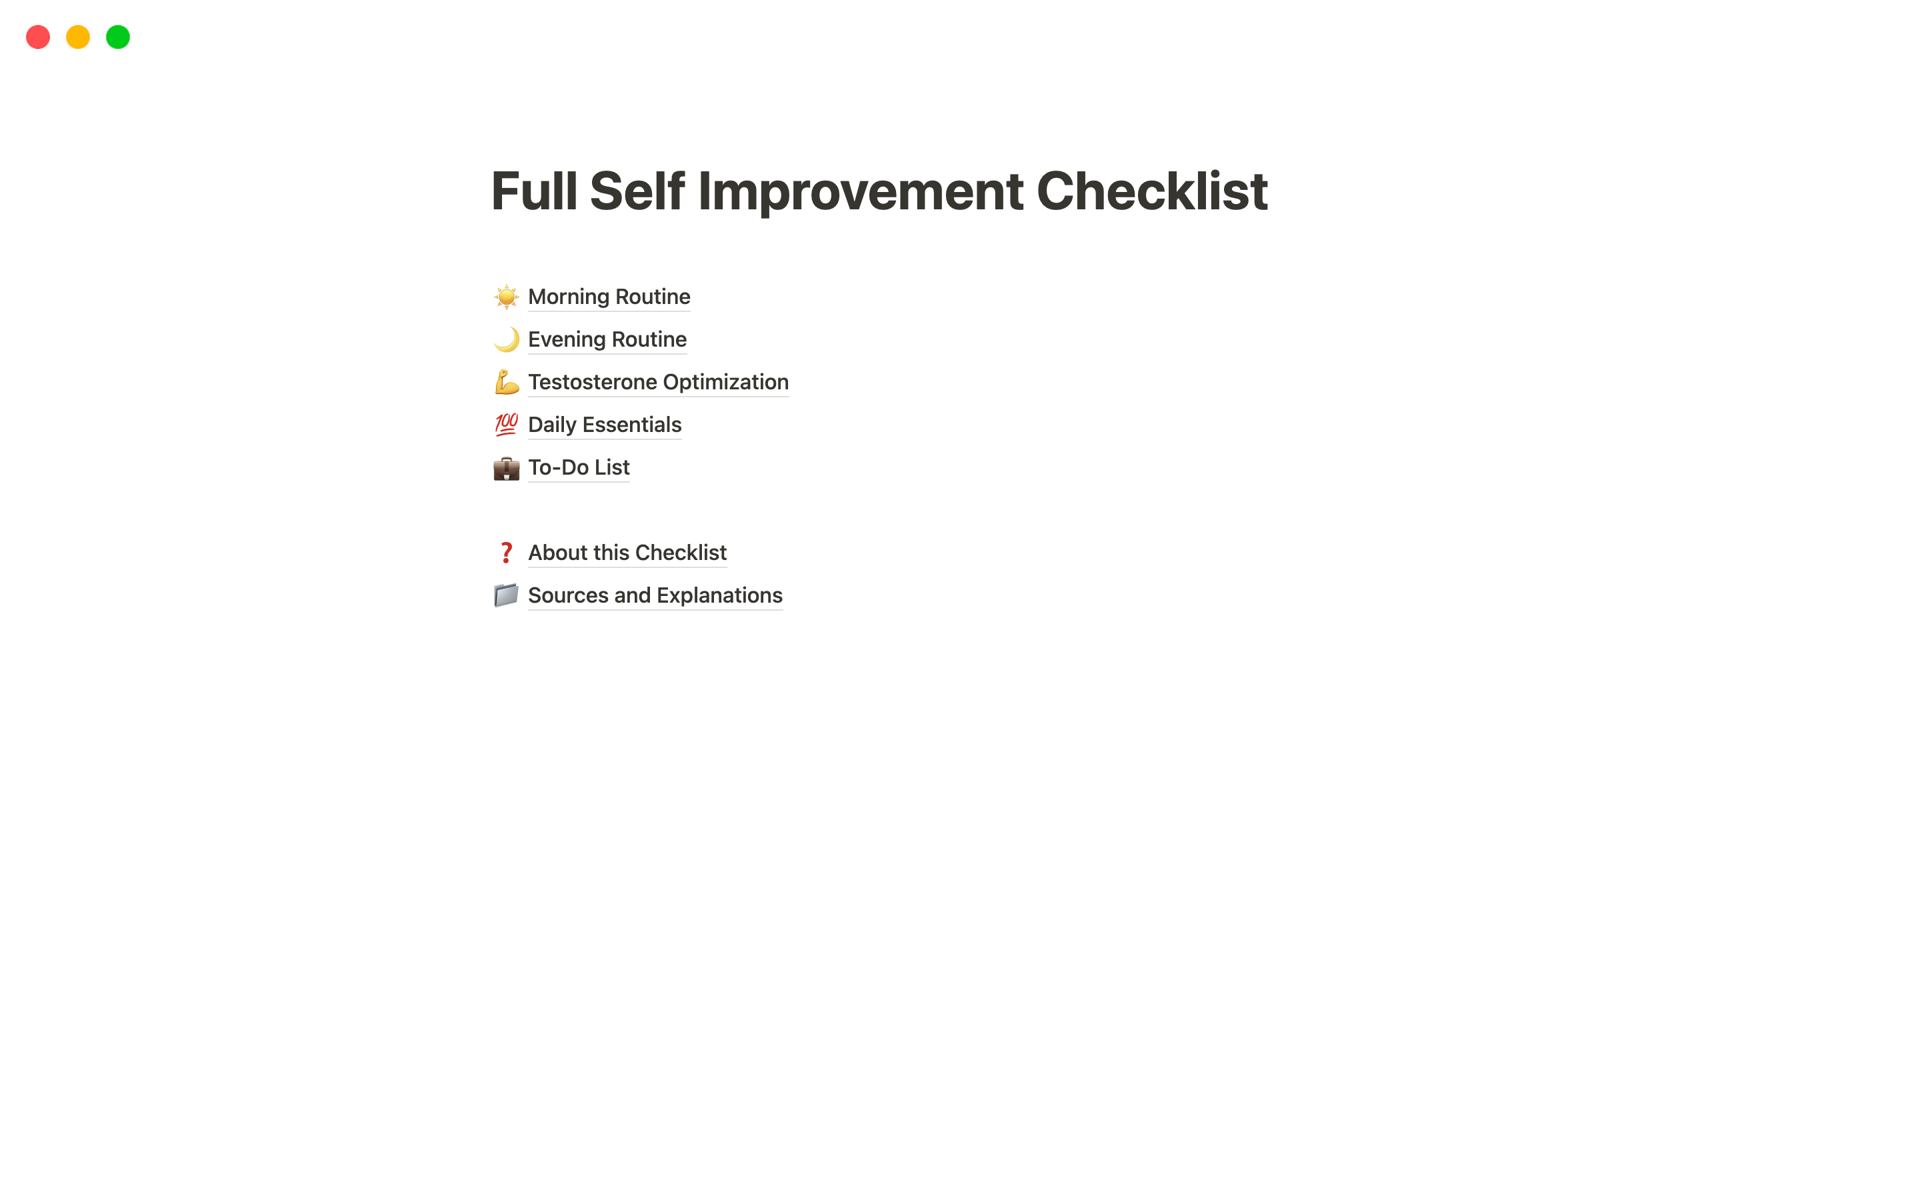 Aperçu du modèle de Full Self Improvement Checklist